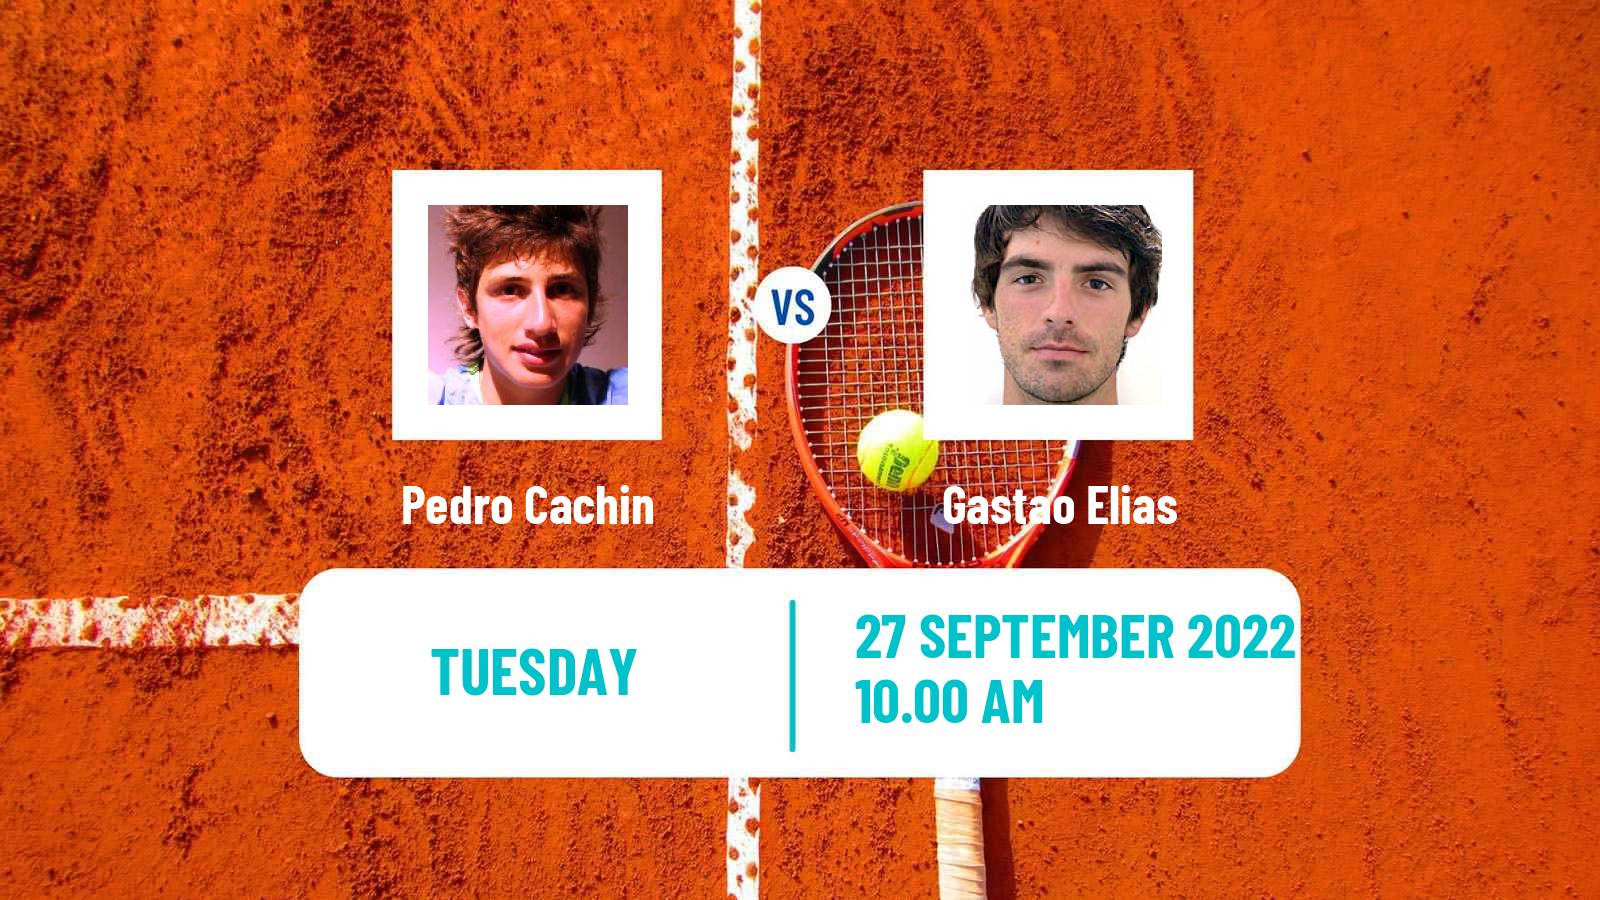 Tennis ATP Challenger Pedro Cachin - Gastao Elias